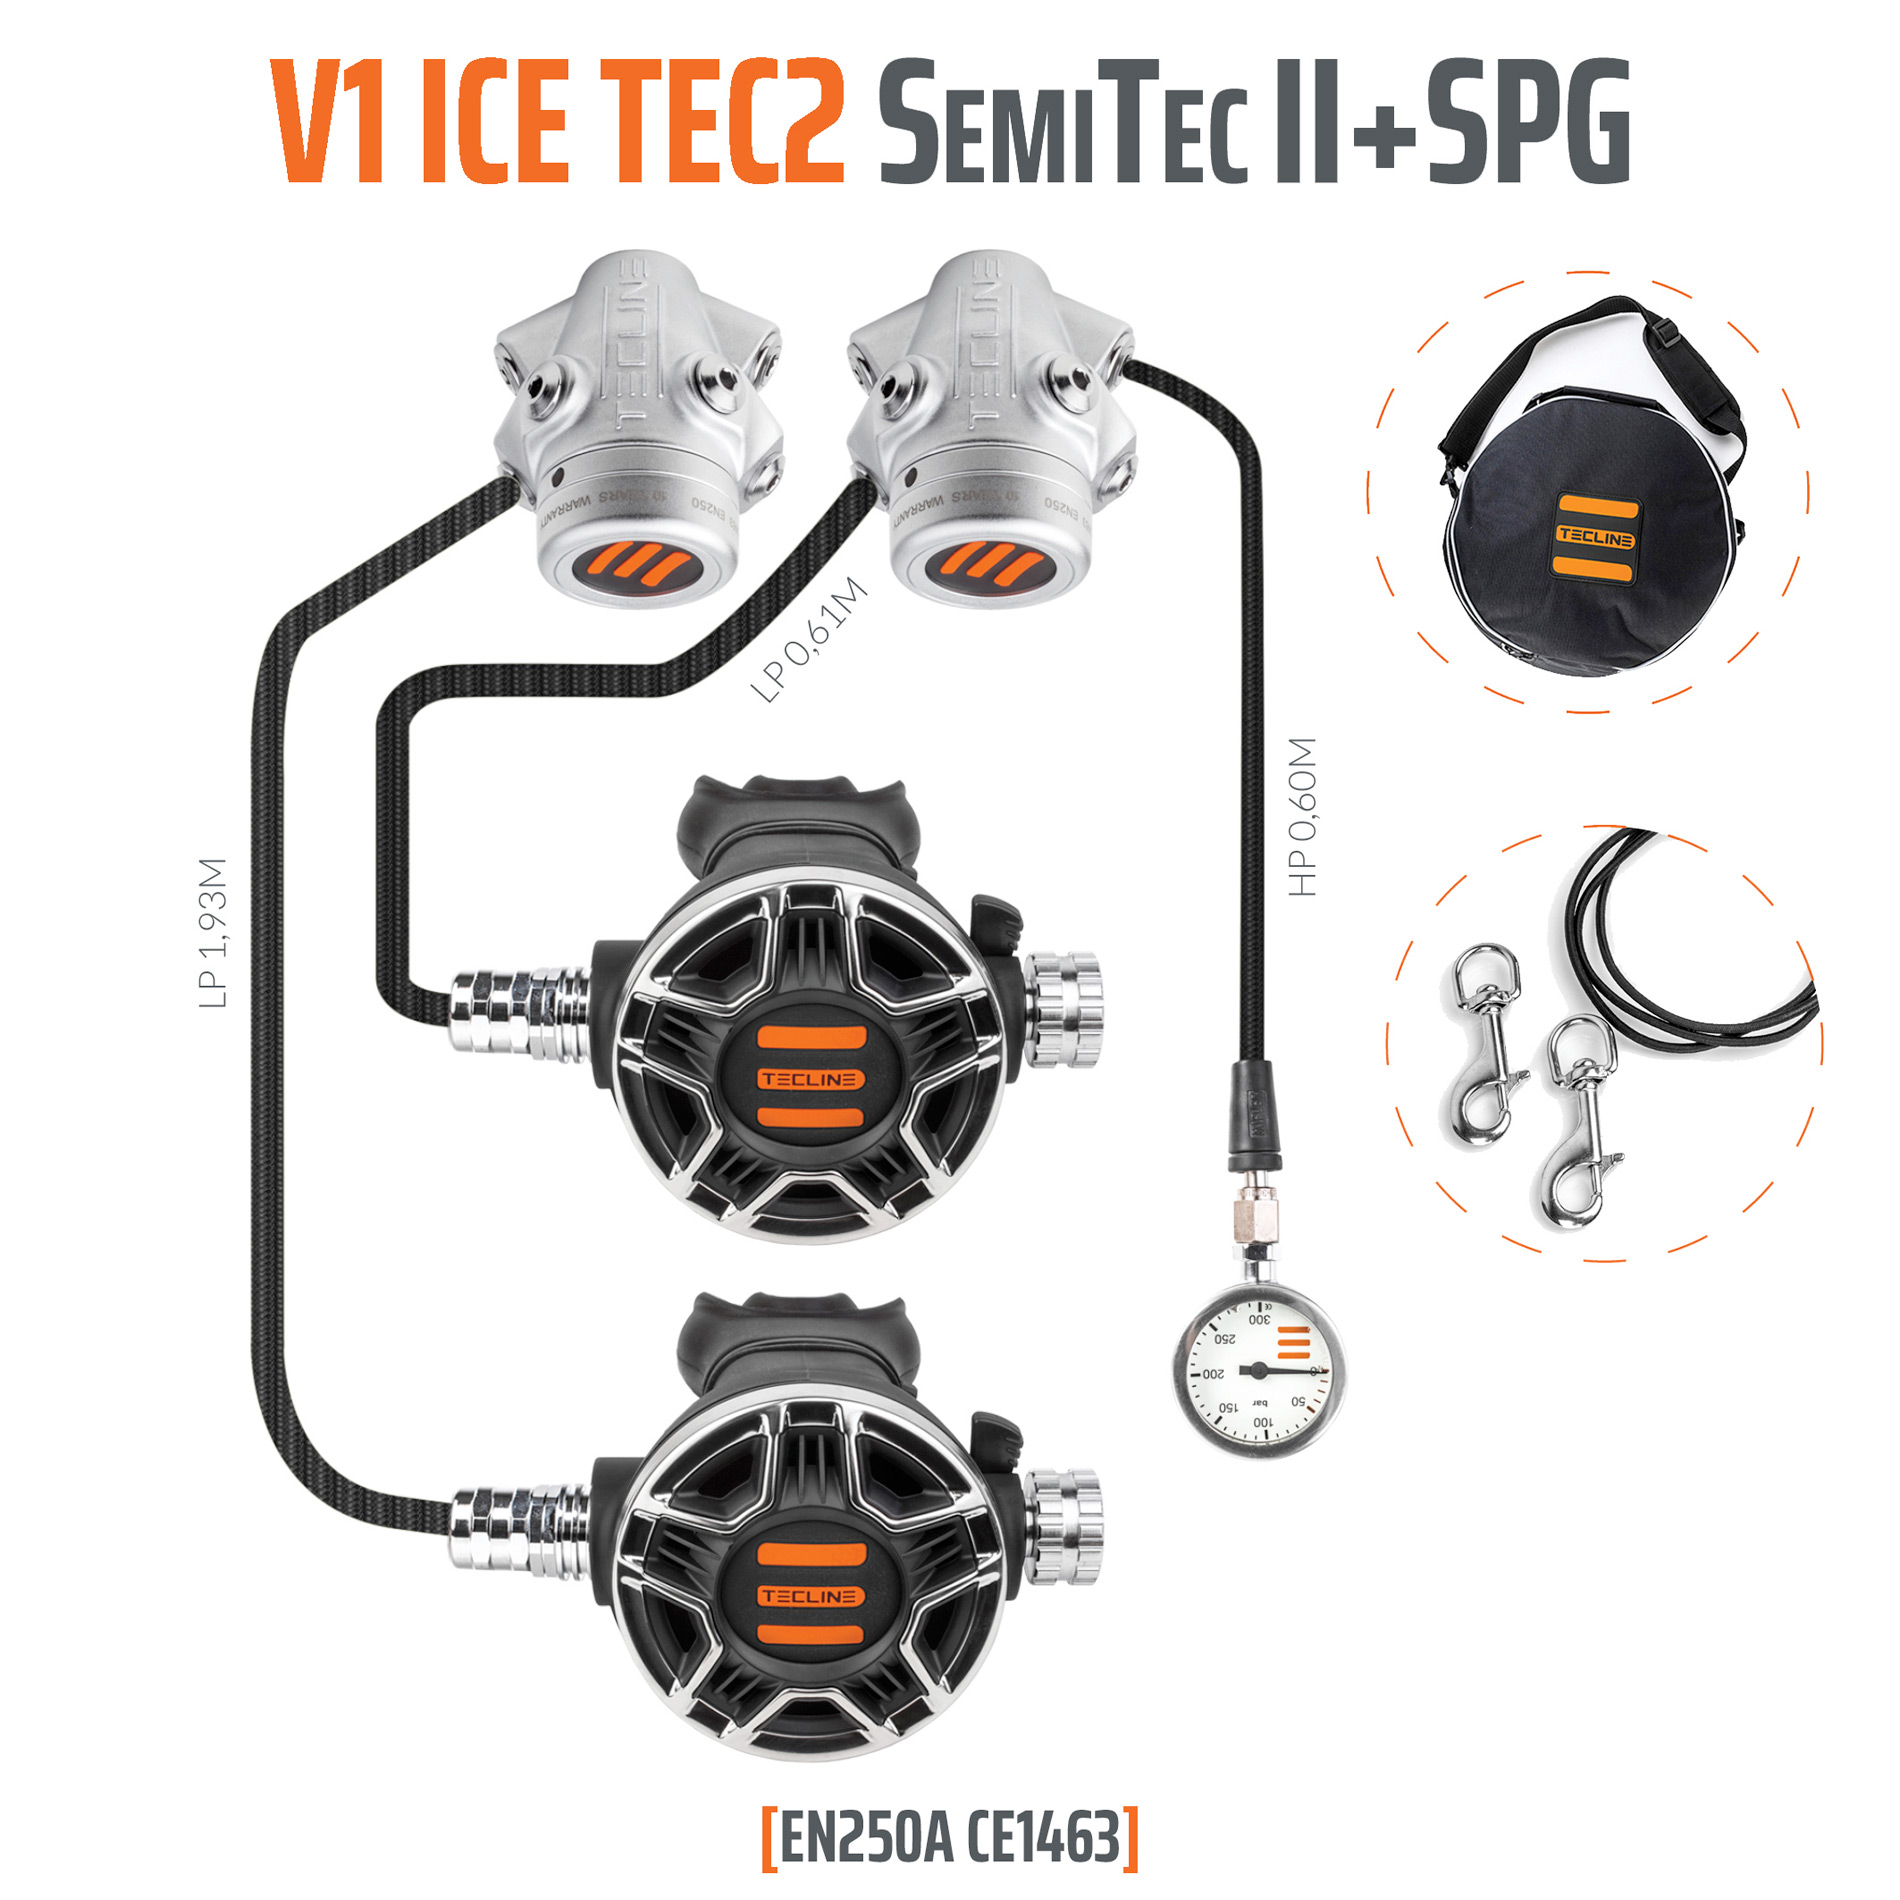 Tecline Regulator V1 ICE TEC2 SemiTec II set with SPG – EN250A